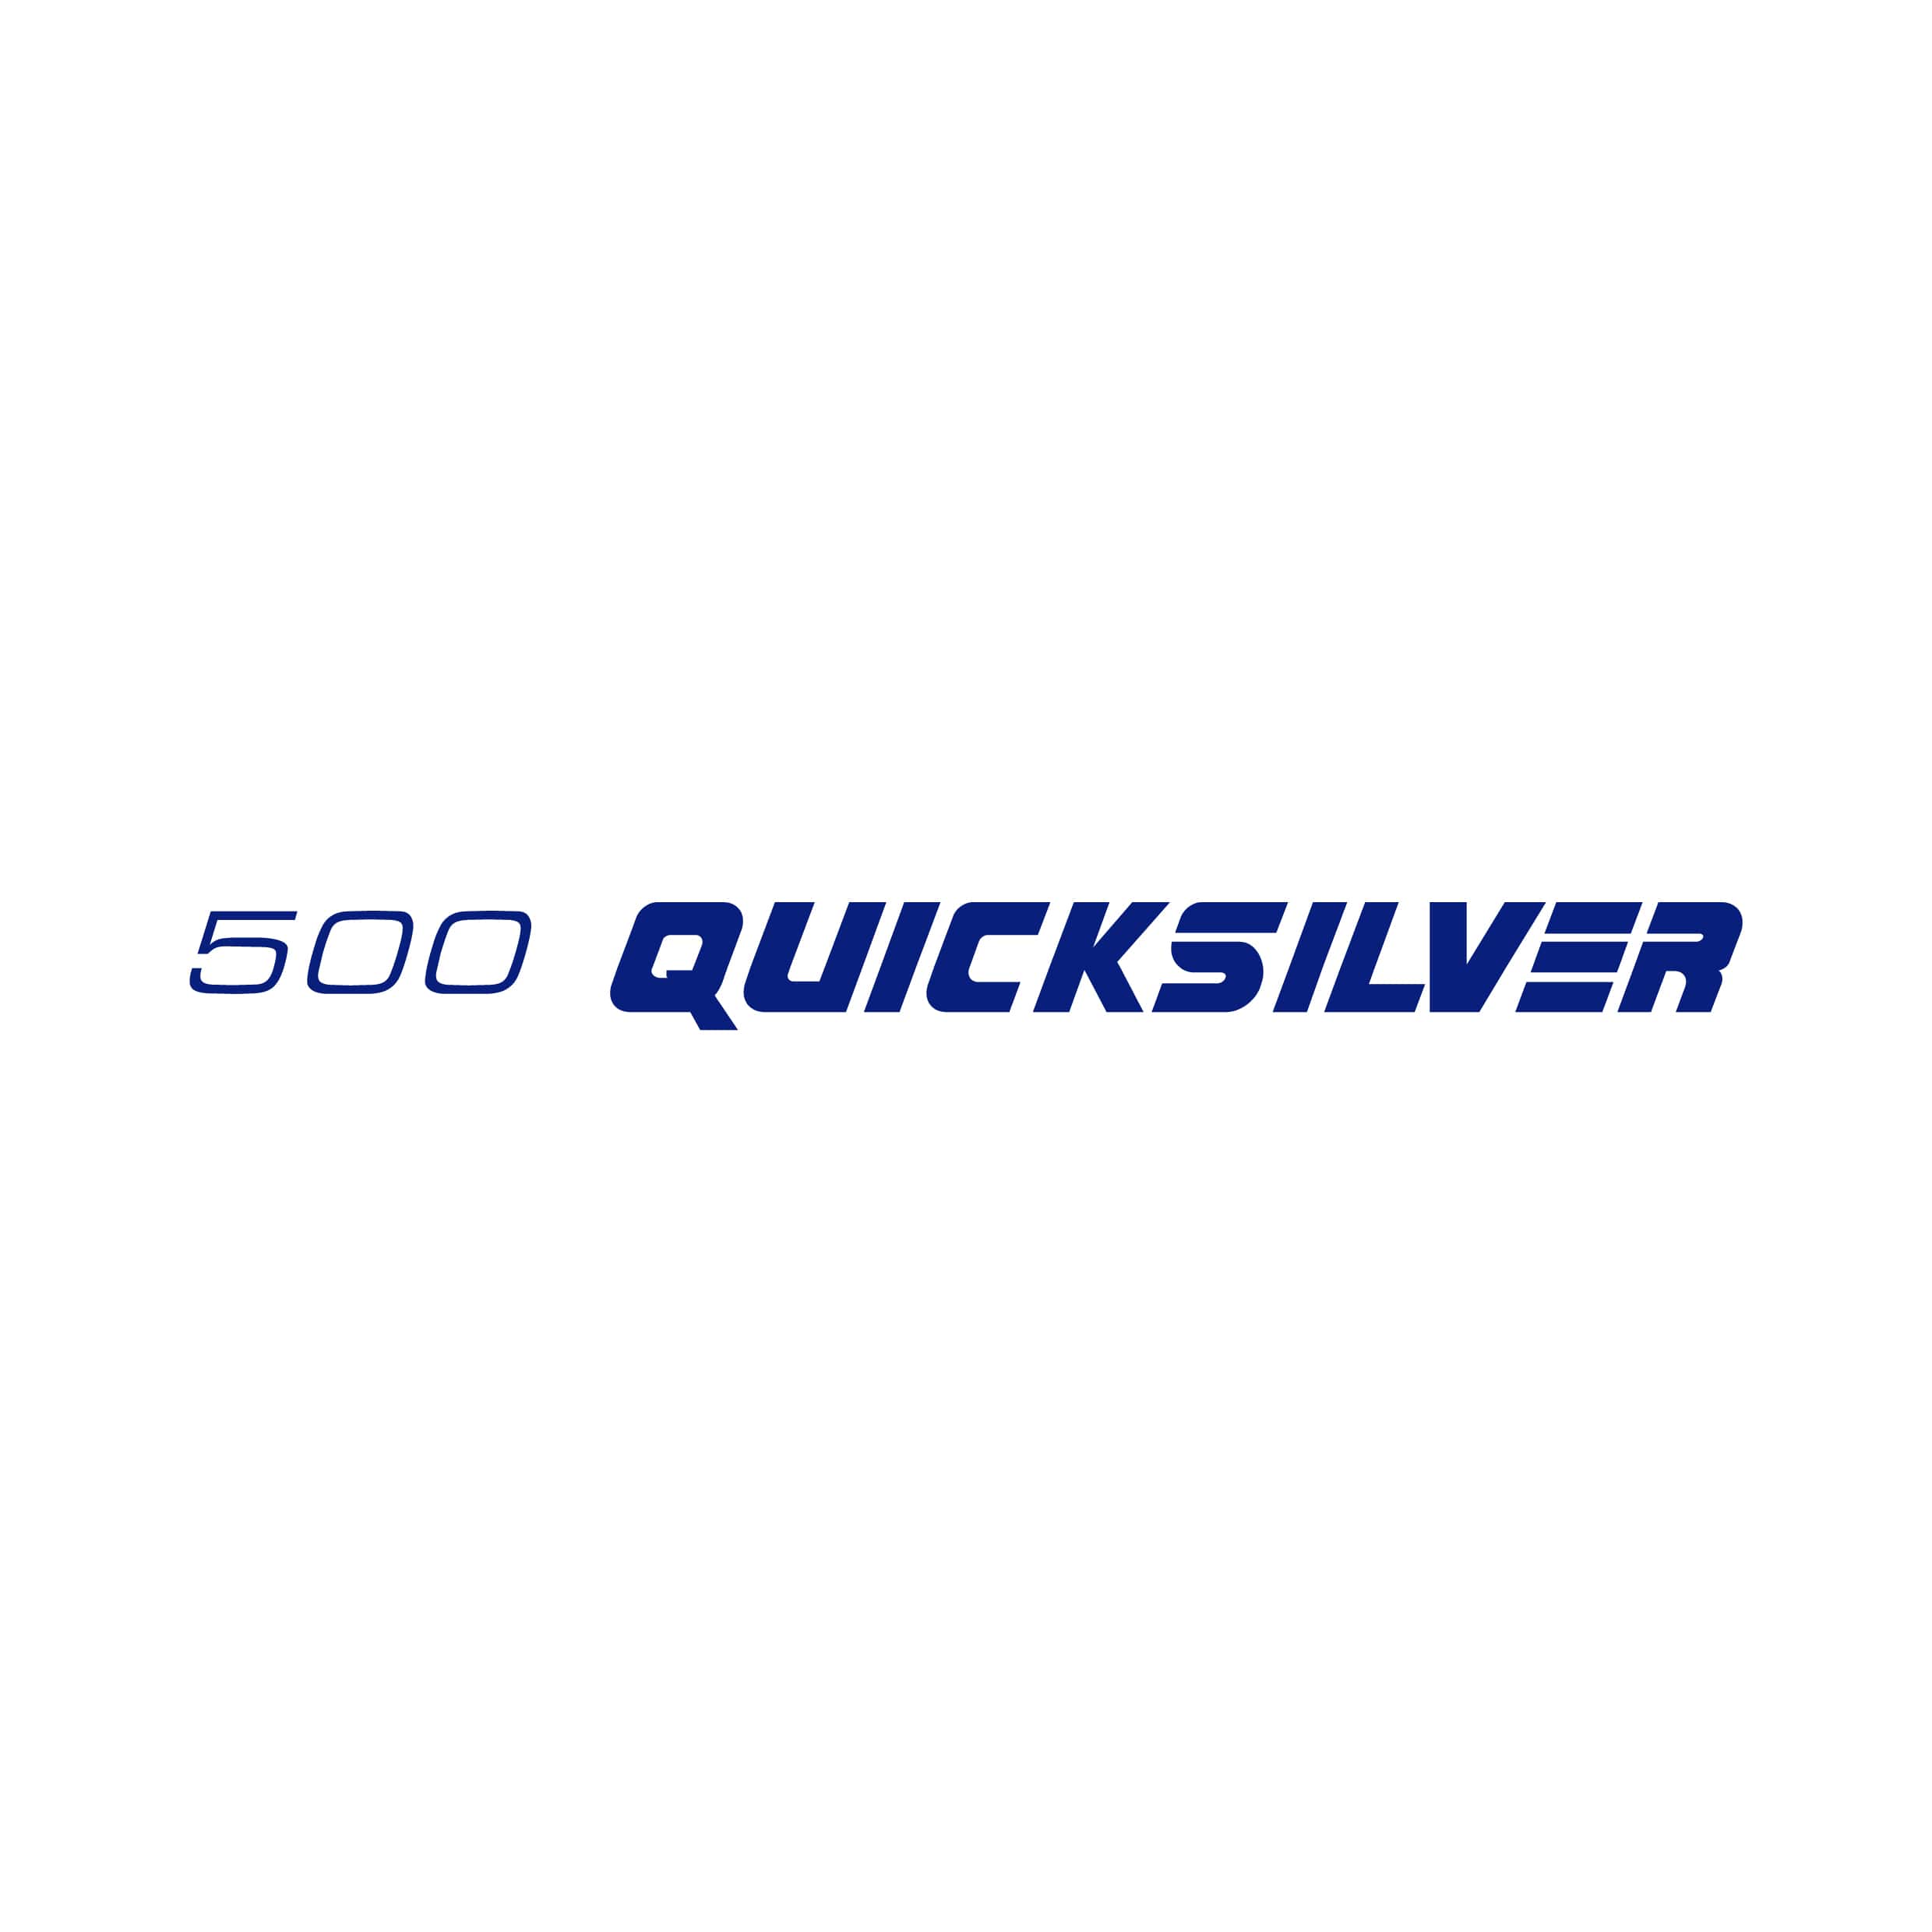 stickers-quicksilver-500-ref7-autocollant-bateau-sticker-semi-rigide-moteur-hors-bord-zodiac-catamaran-autocollants-jet-ski-mer-voilier-logo-min